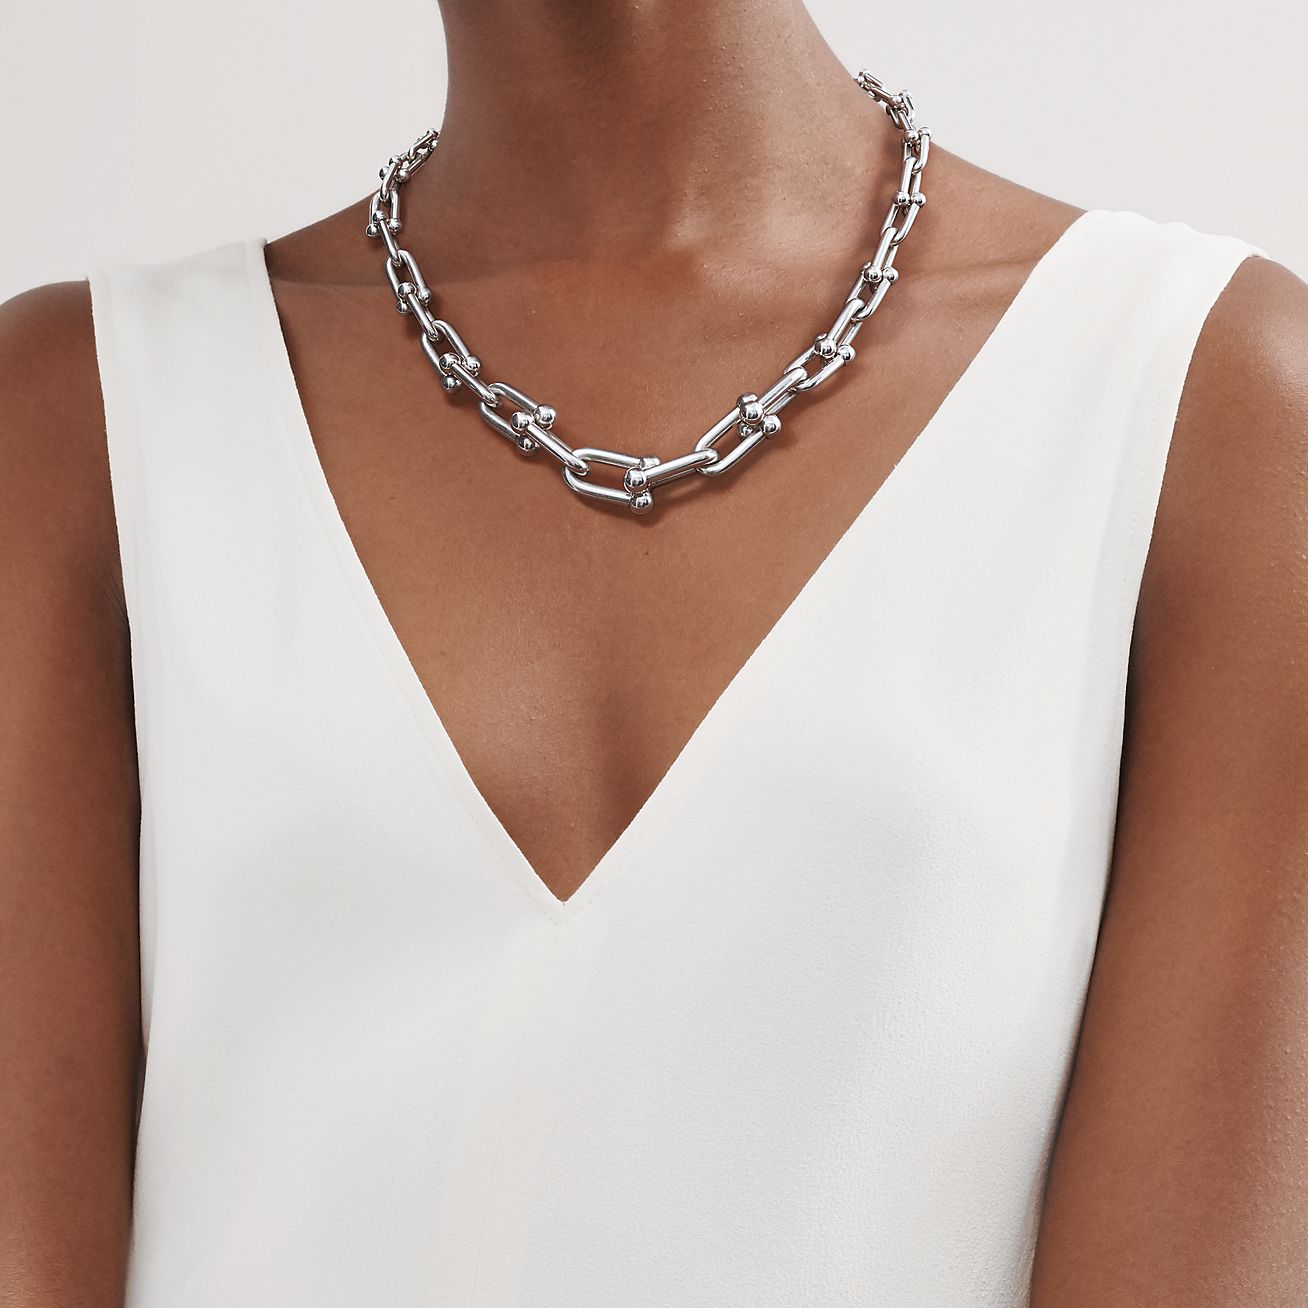 Tiffany Hardwear Graduated Link Necklace in Sterling Silver, Size: 18 in.